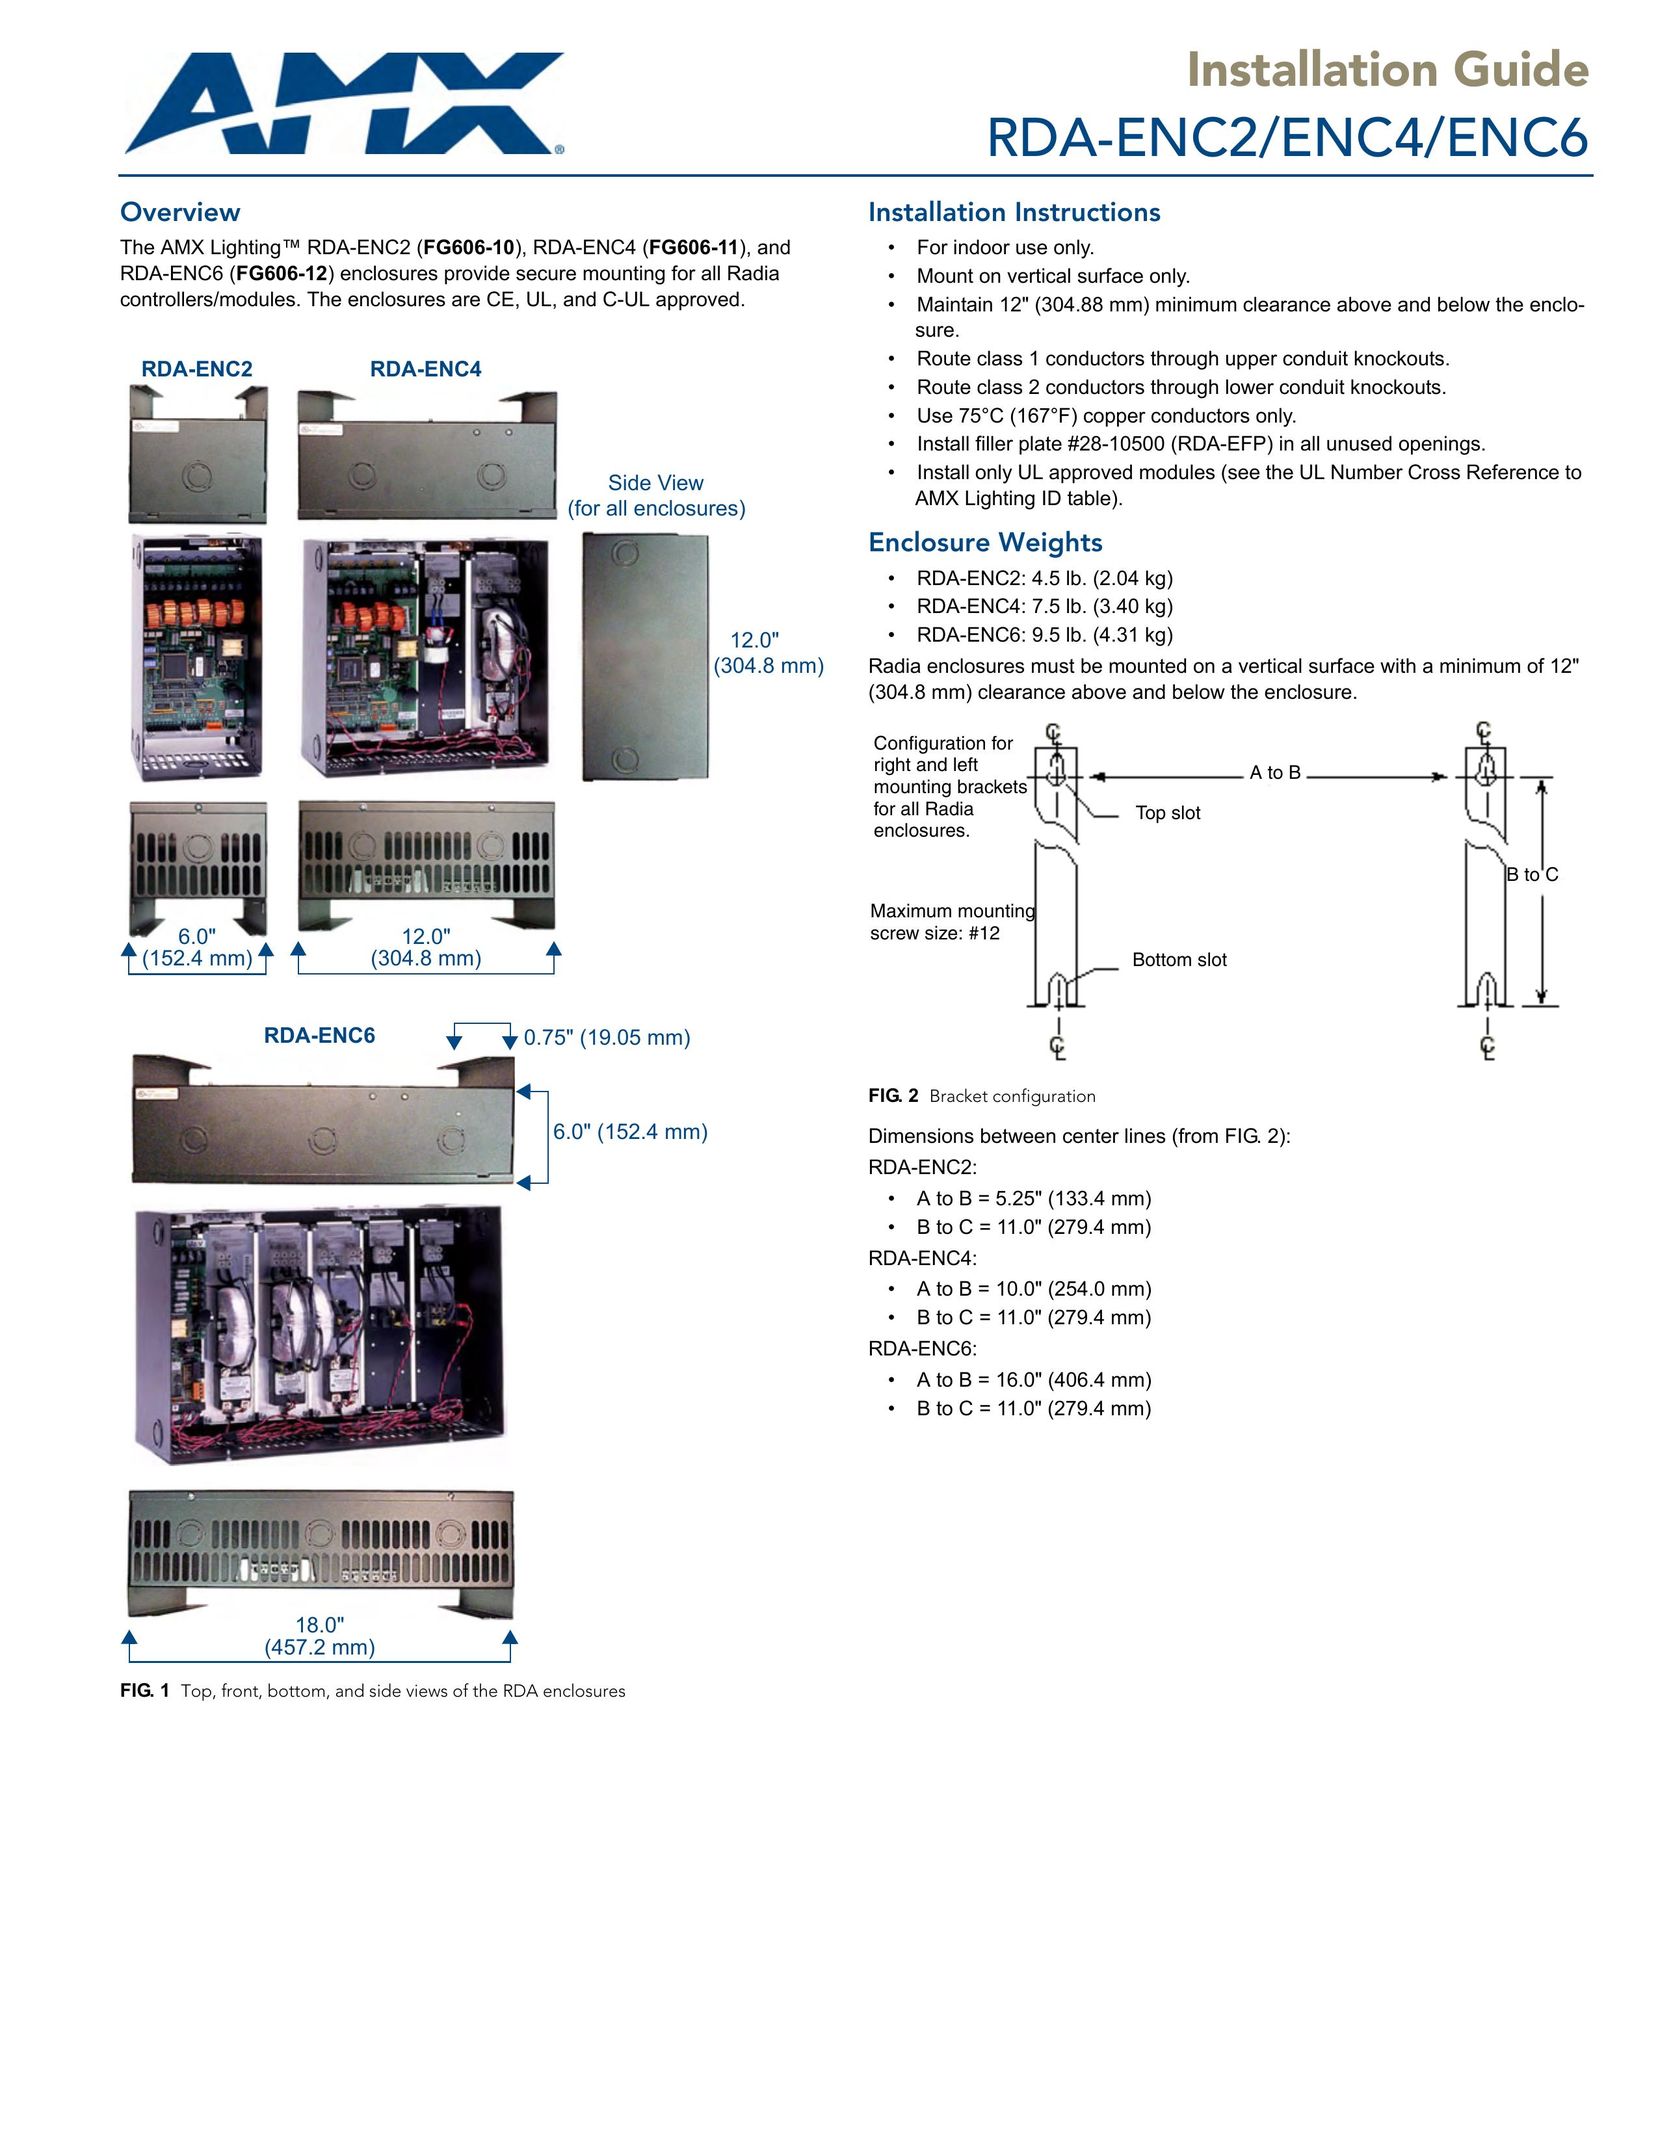 AMX RDA-ENC2 Indoor Furnishings User Manual